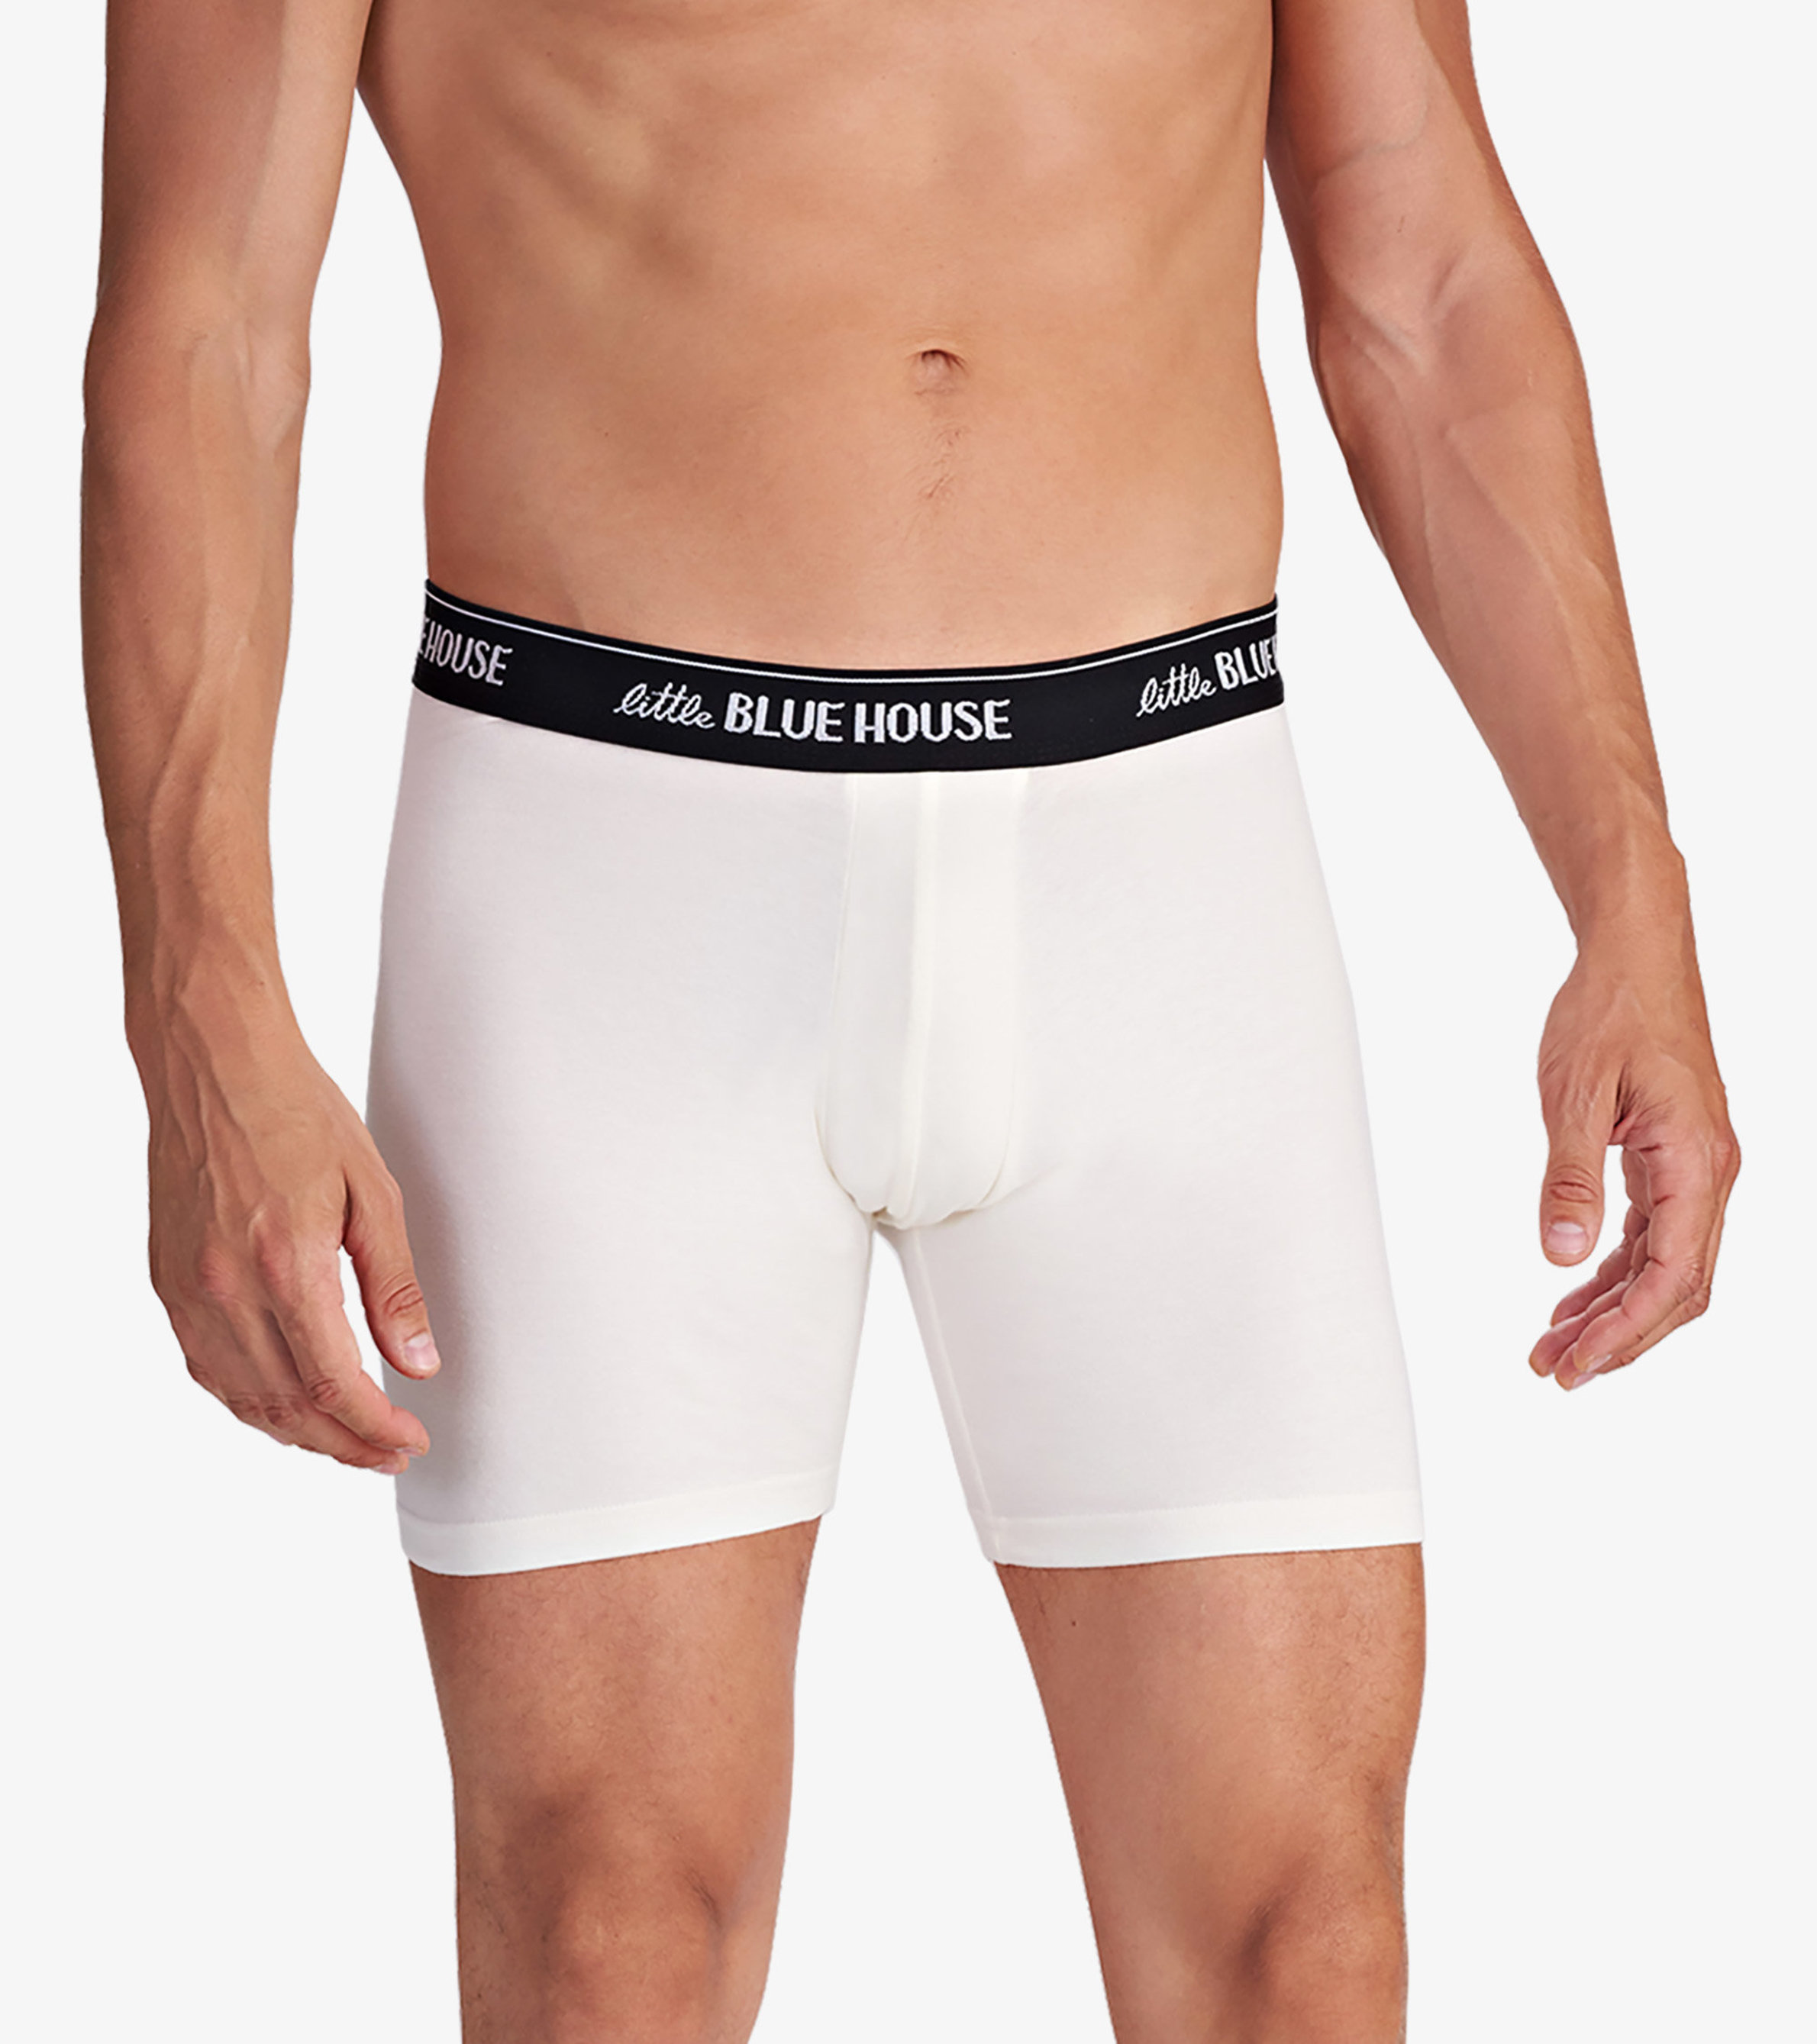 Polo Ralph Lauren Underwear Review: Boxers, Briefs, Trunks & More